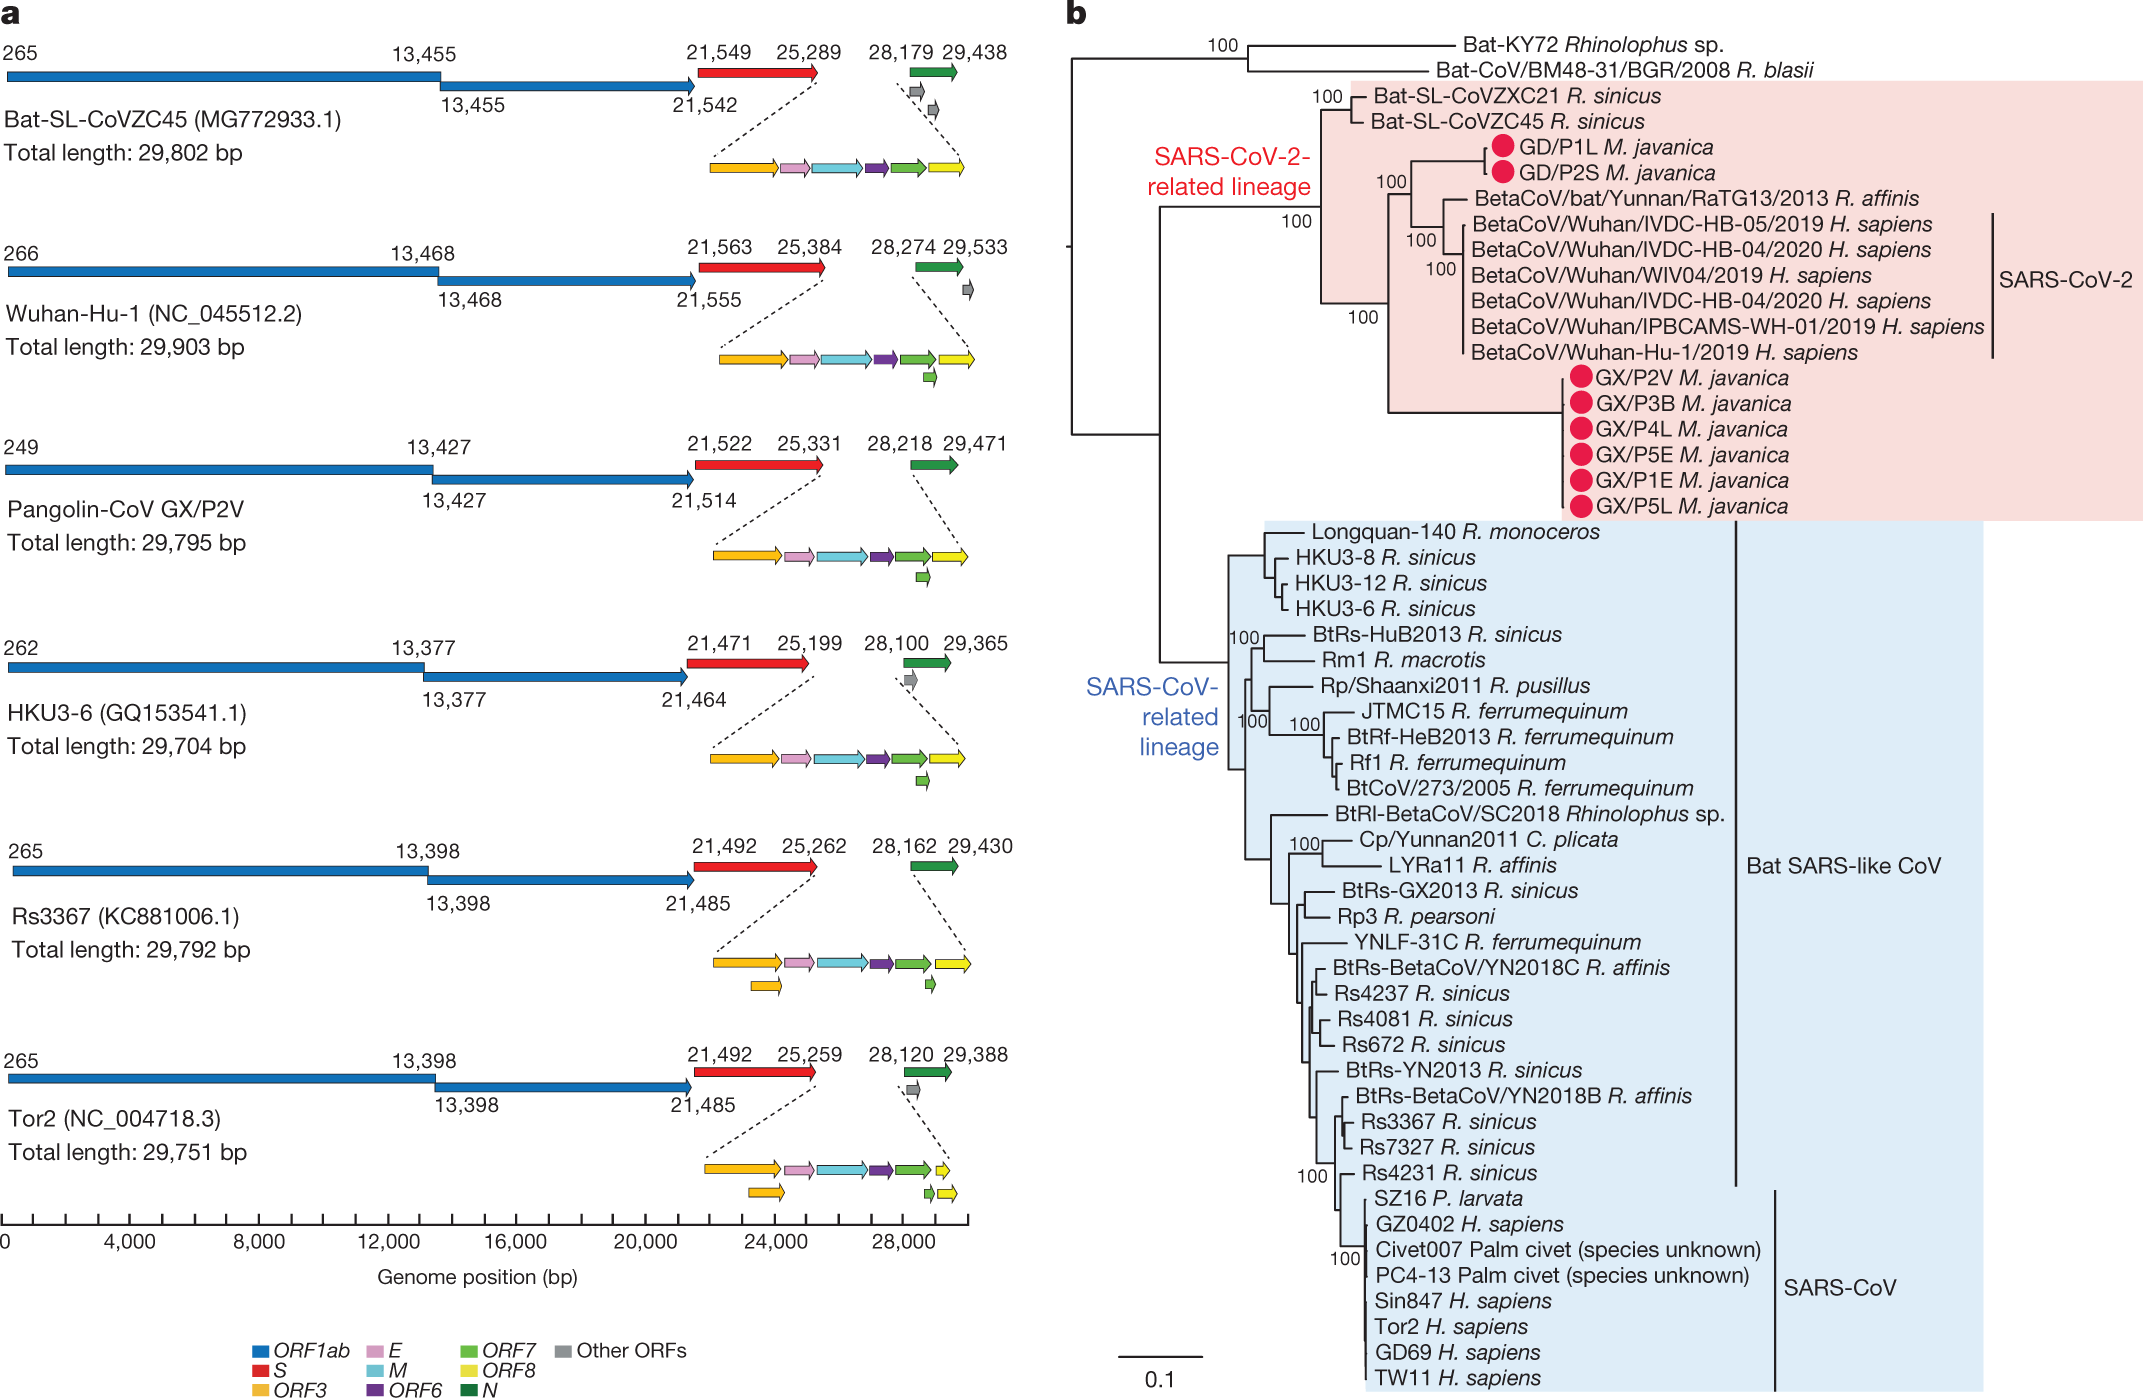 Identifying SARS-CoV-2-related coronaviruses in Malayan pangolins ...